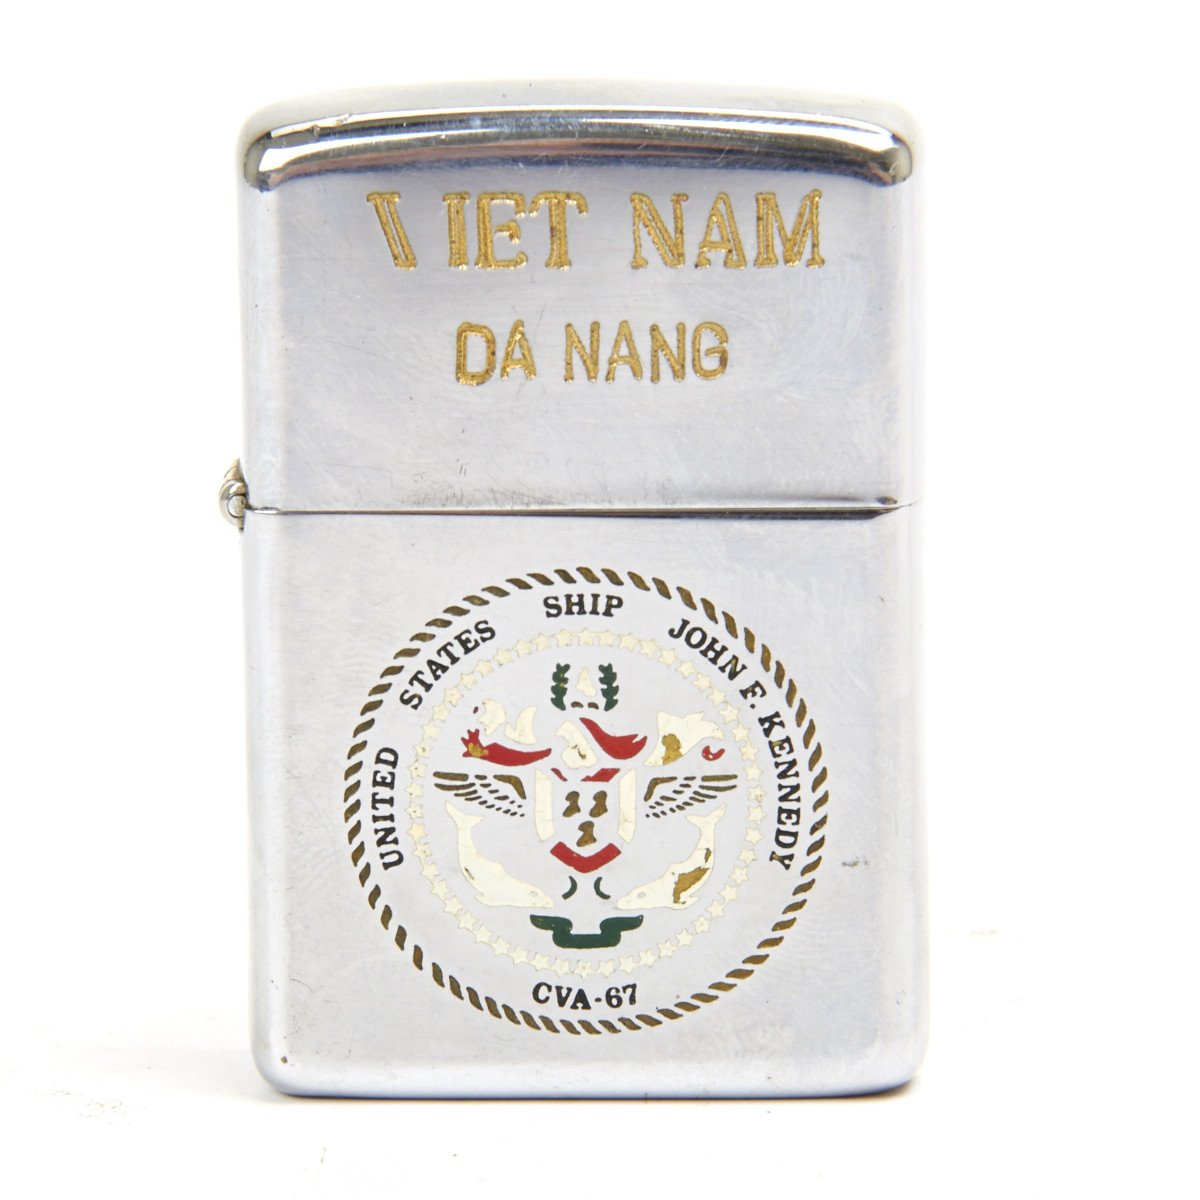 Original U.S. Vietnam War Personal Zippo Cigarette Lighter of